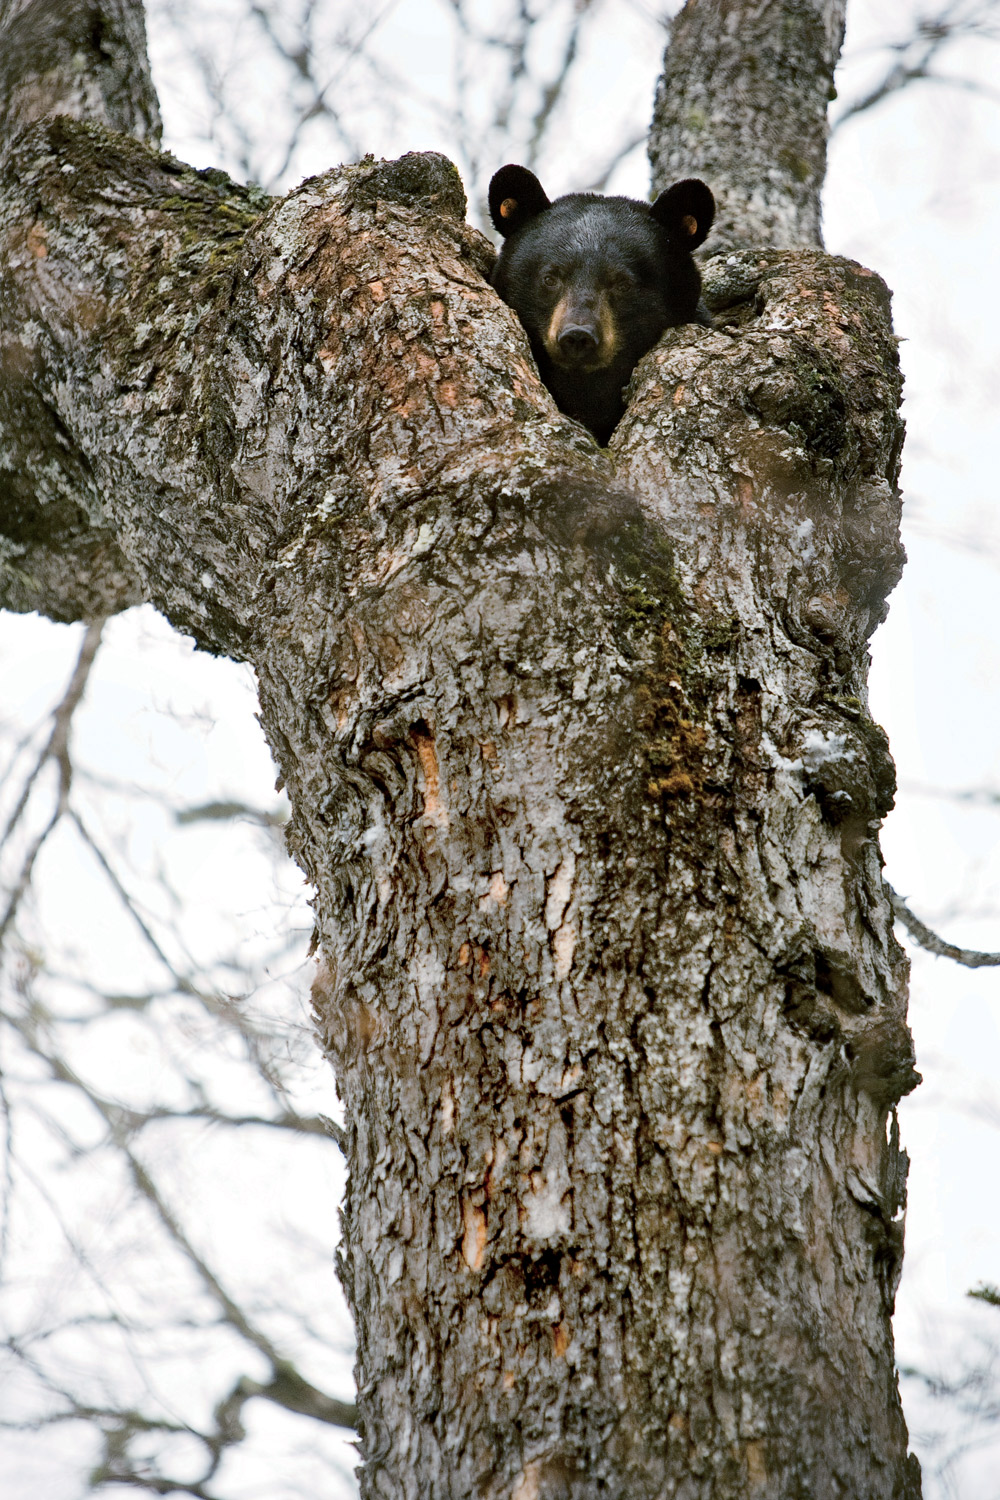 Tracking Maine Black Bears | Photographs - New England Today